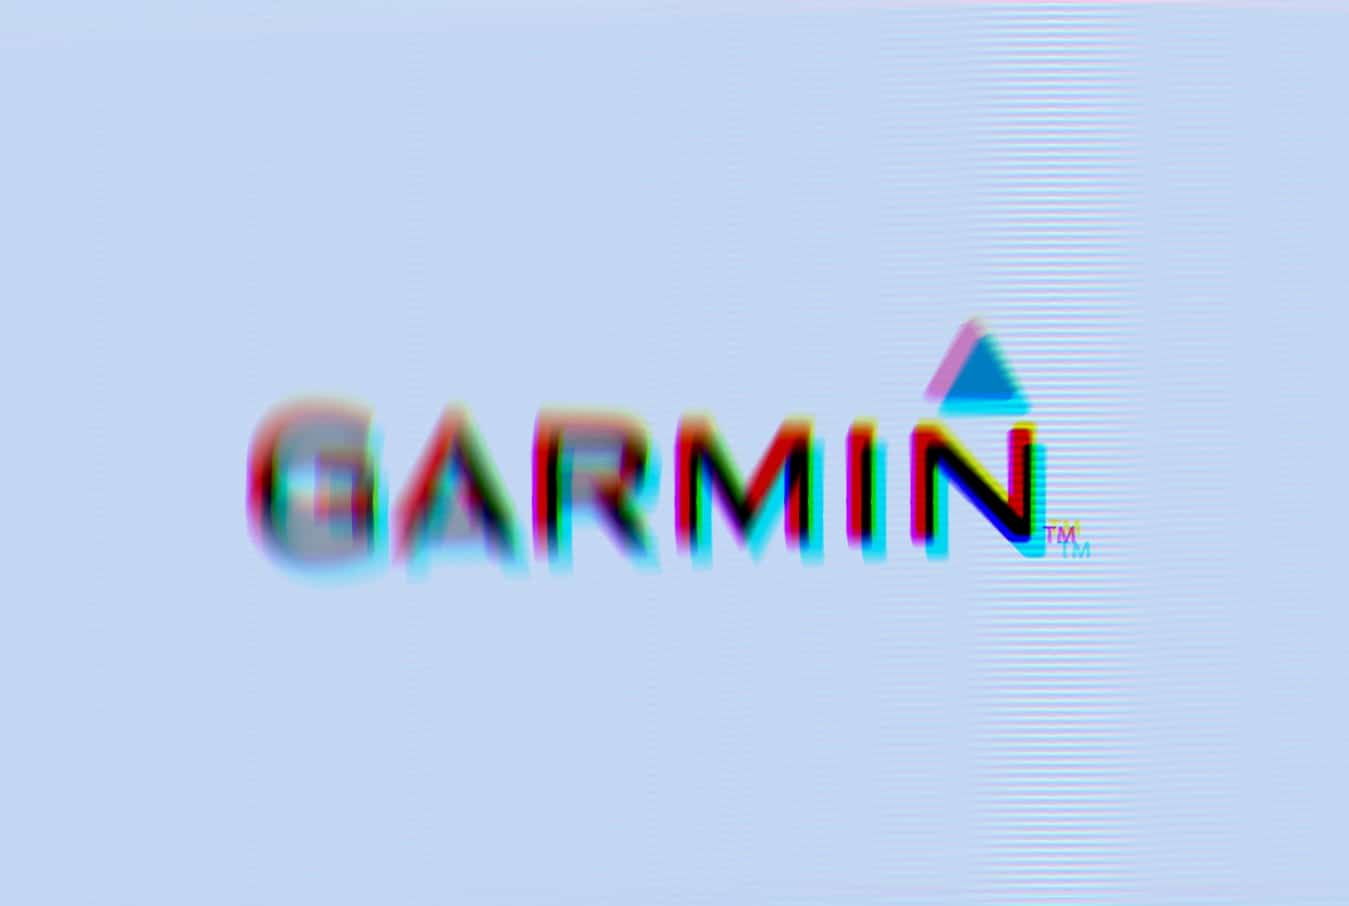 Fitness devices maker Garmin ransomware attack cripples operation